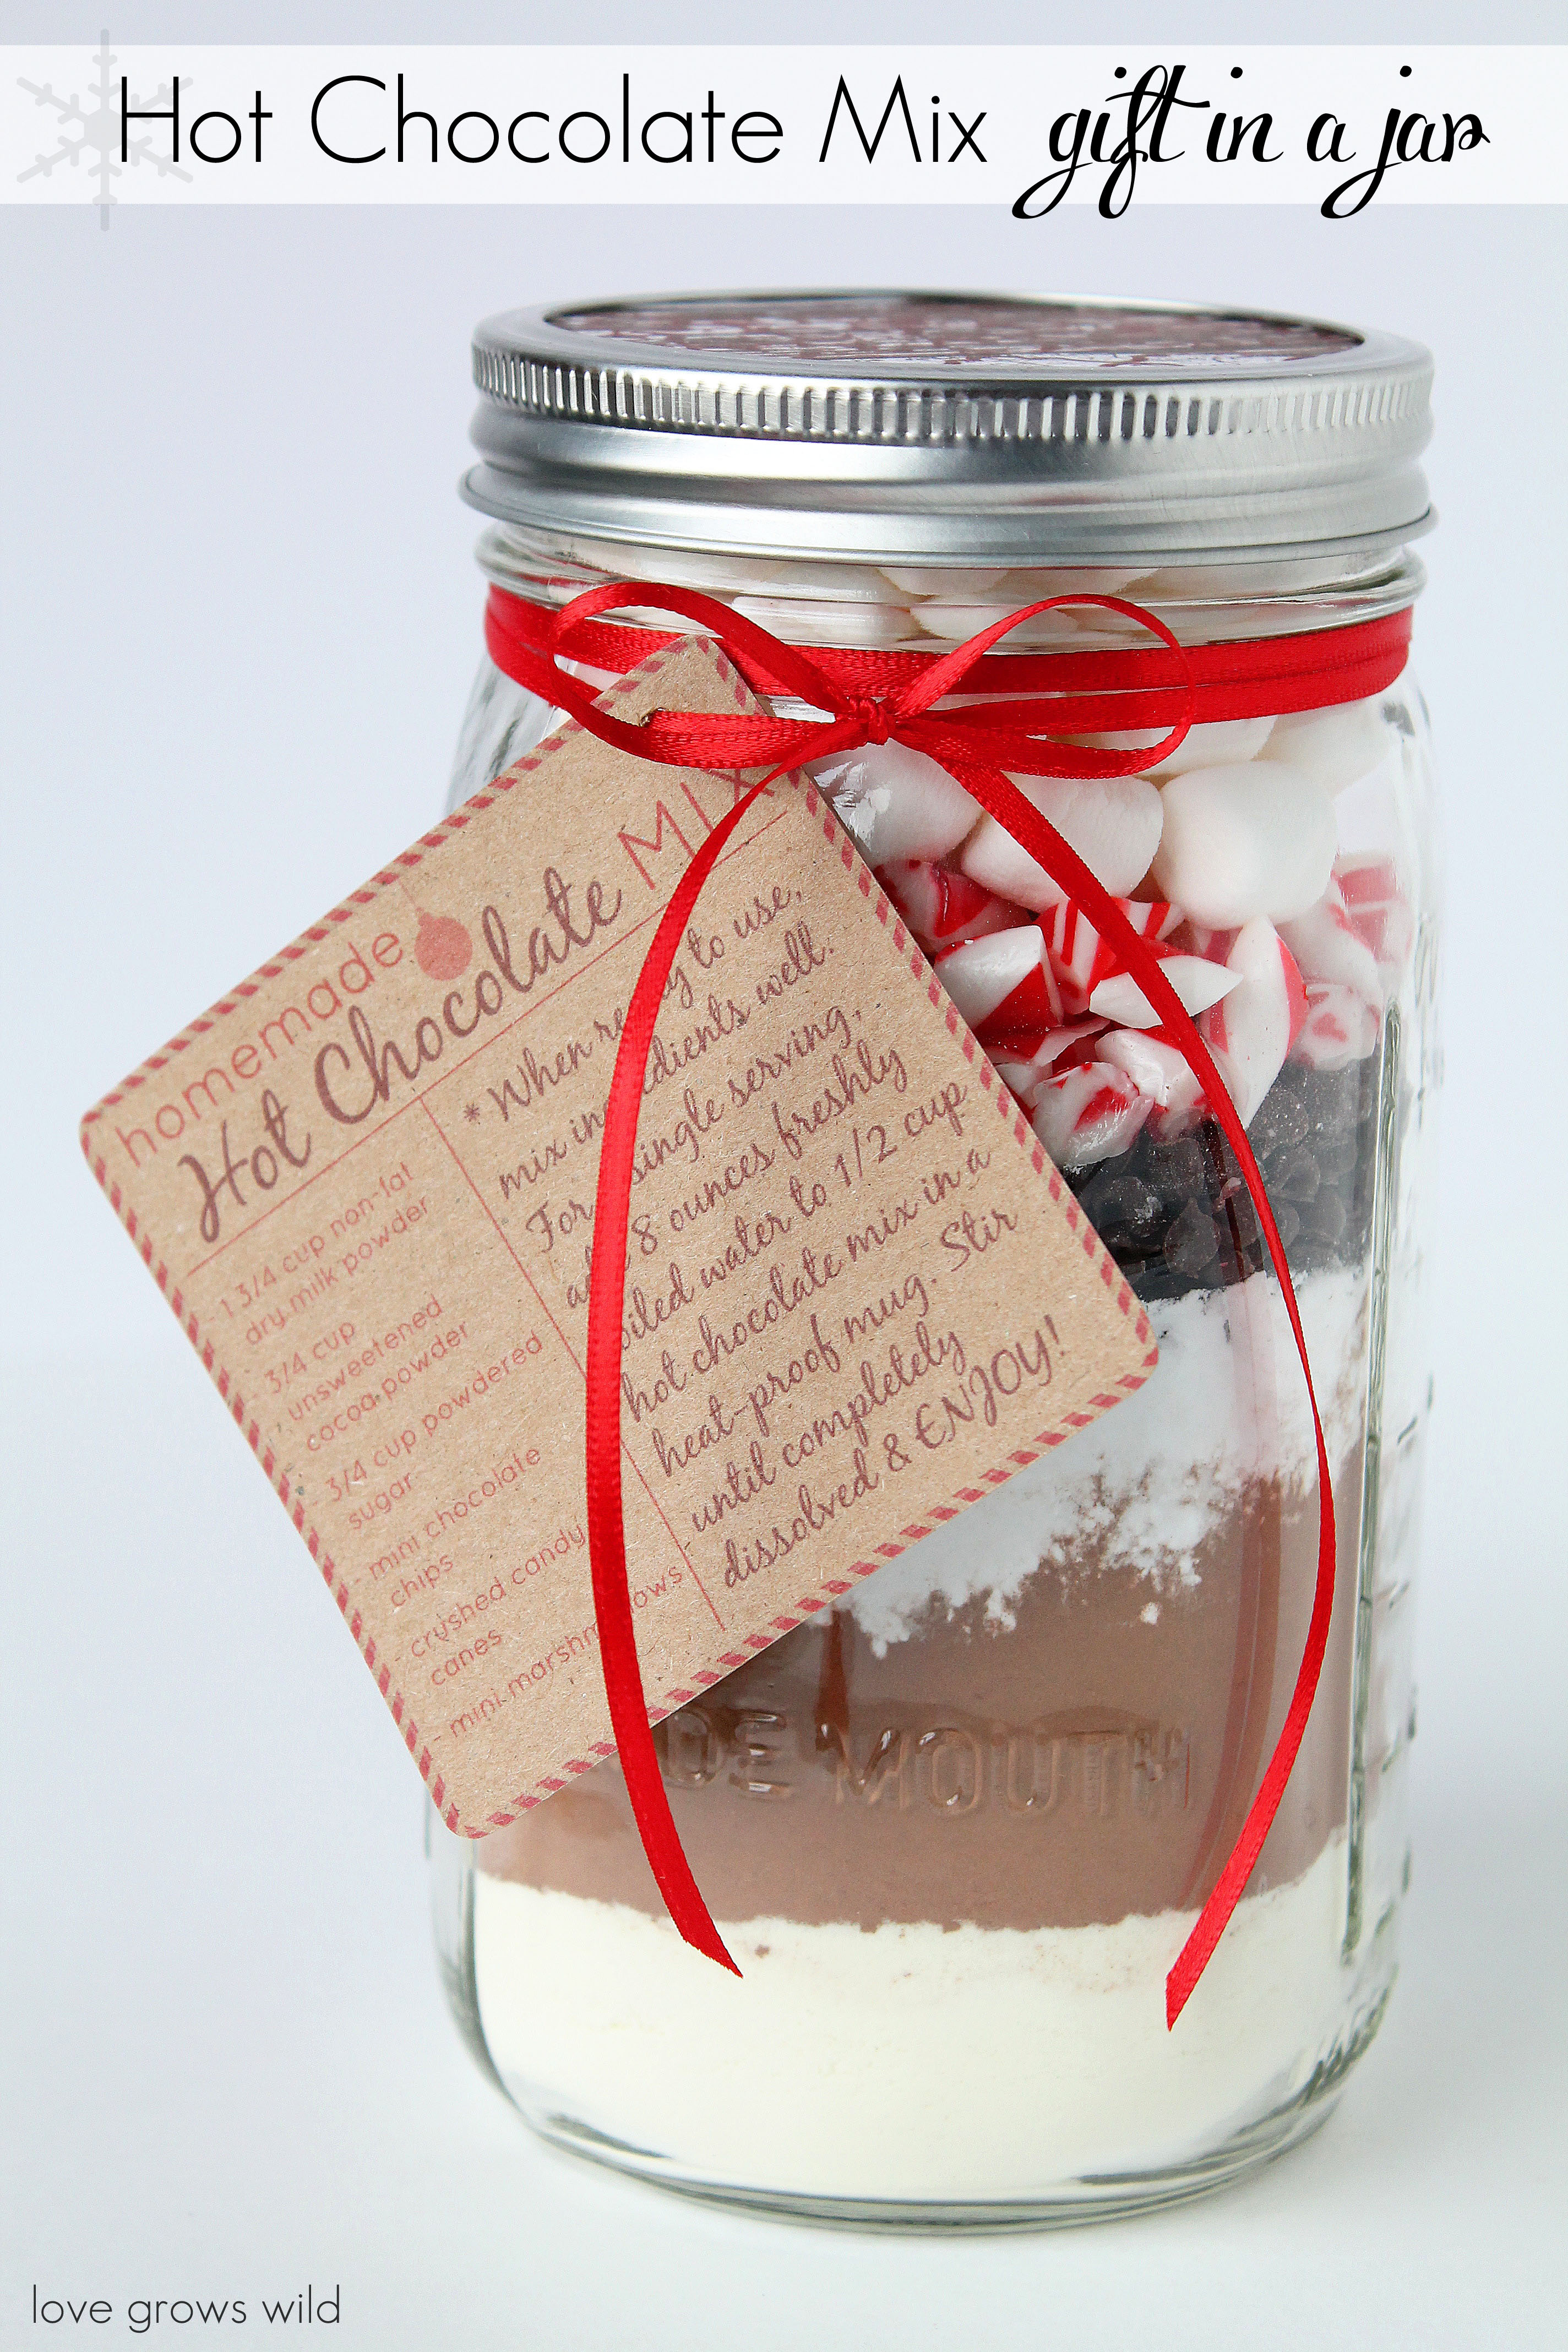 Homemade Hot Chocolate Mix in a Mason Jar - a perfect holiday gift idea!